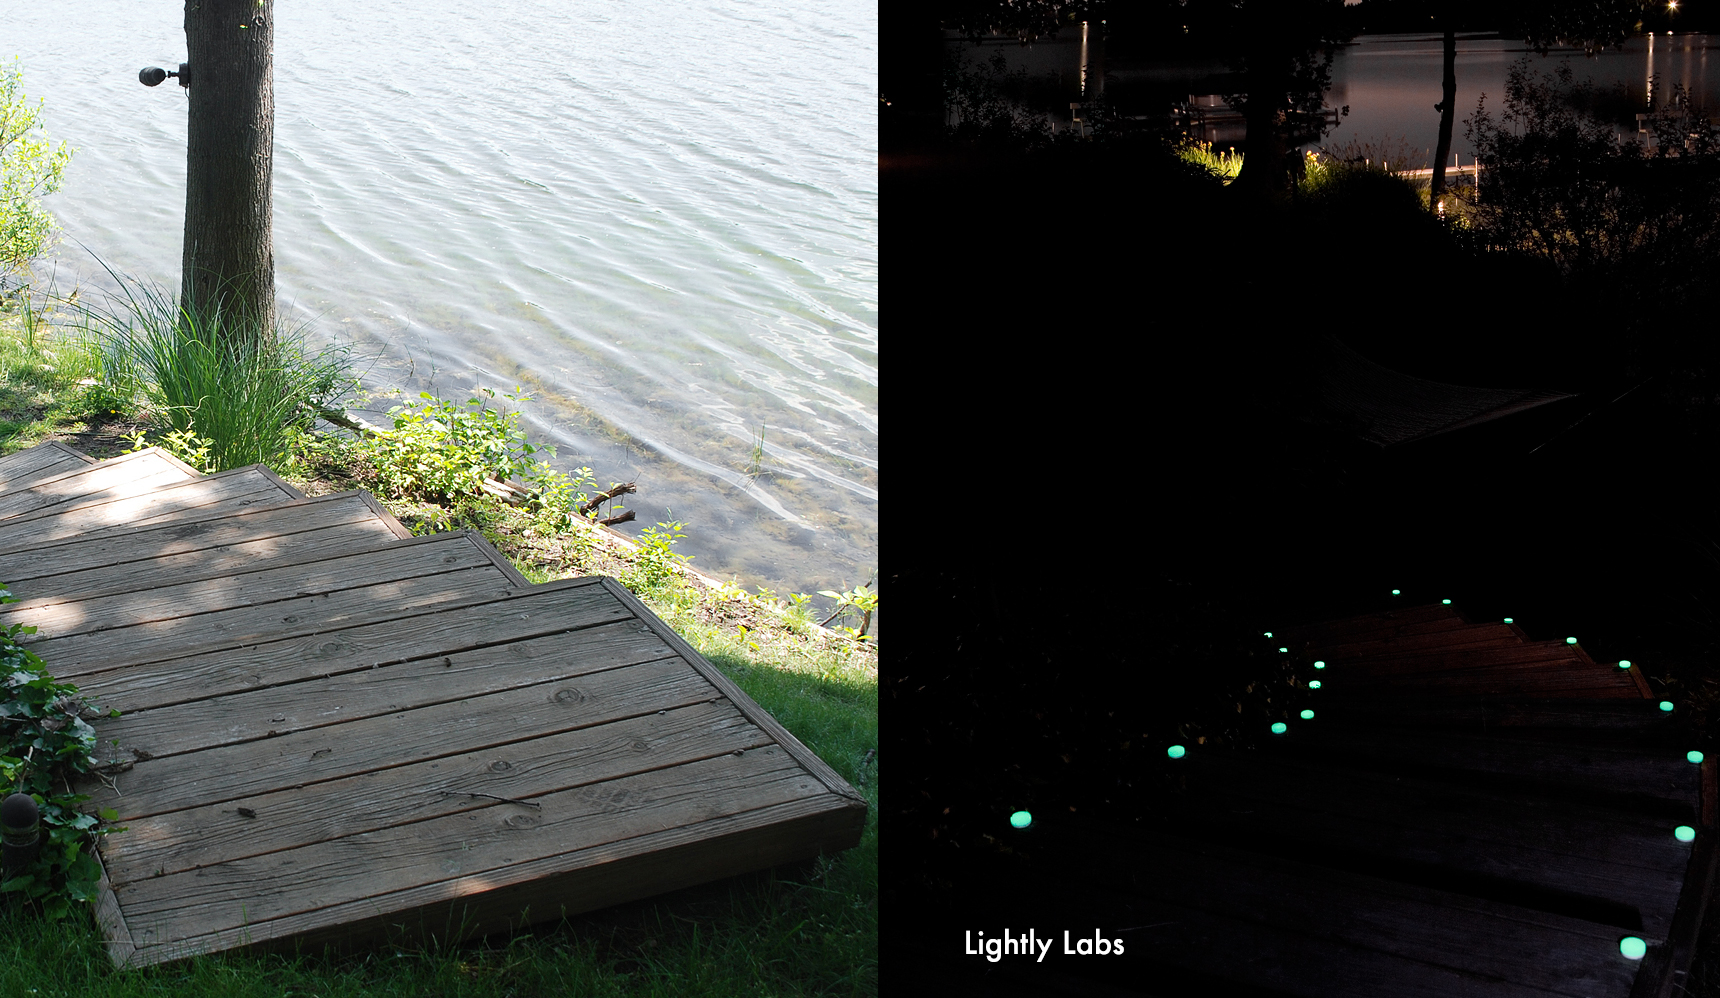 Lightly_Dock-Compare.jpg